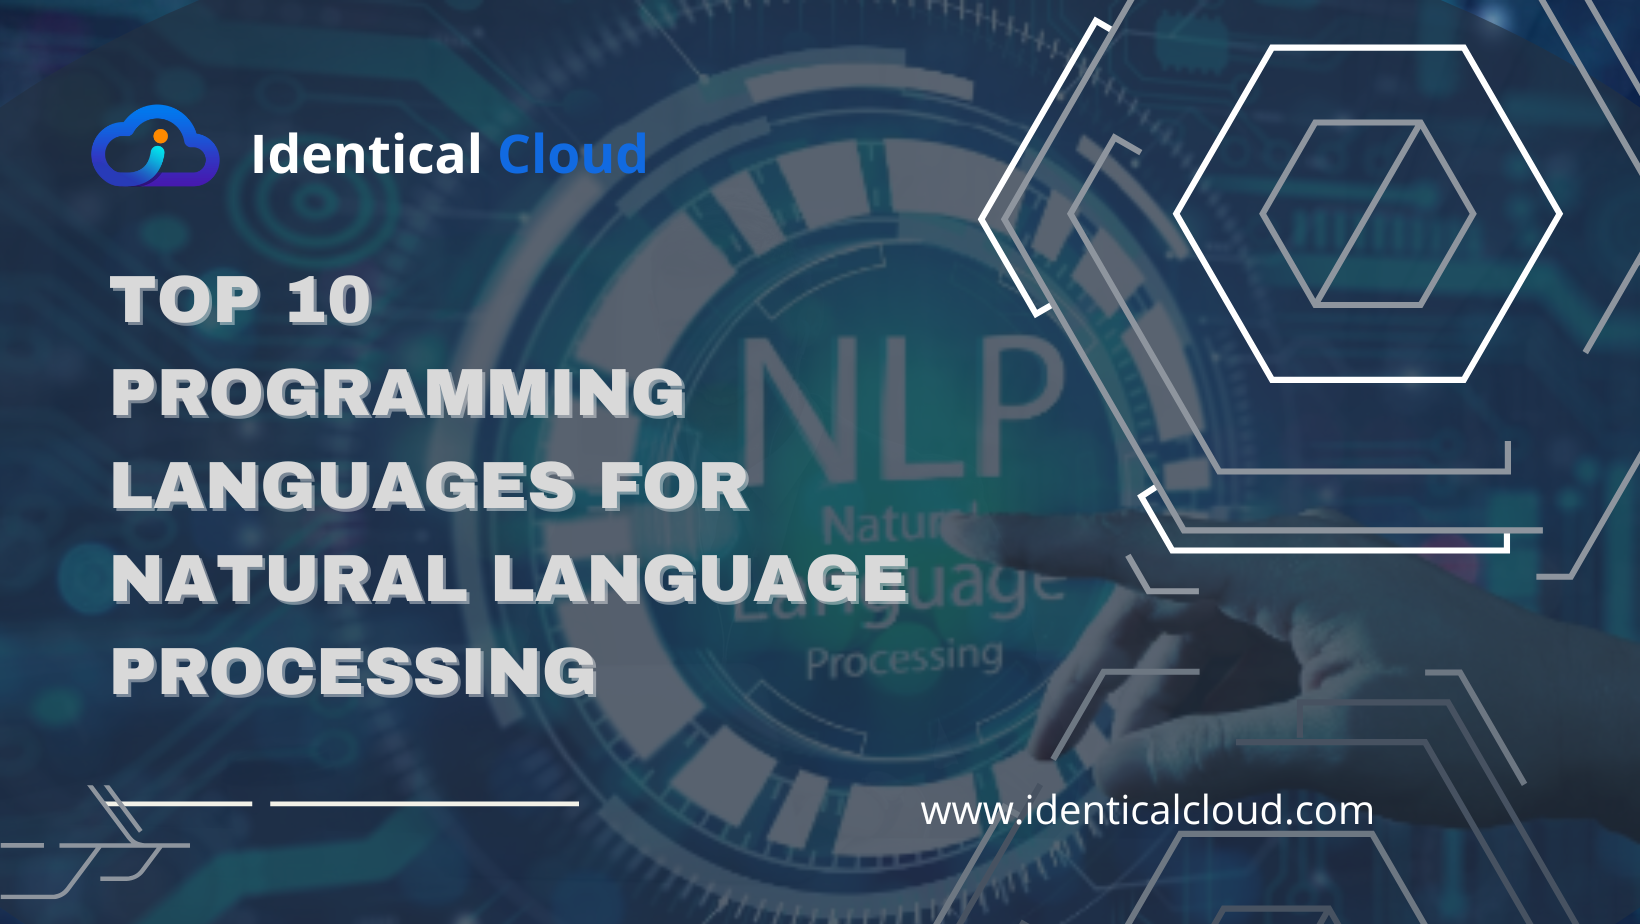 Top 10 Programming Languages for Natural Language Processing - identicalcloud.com